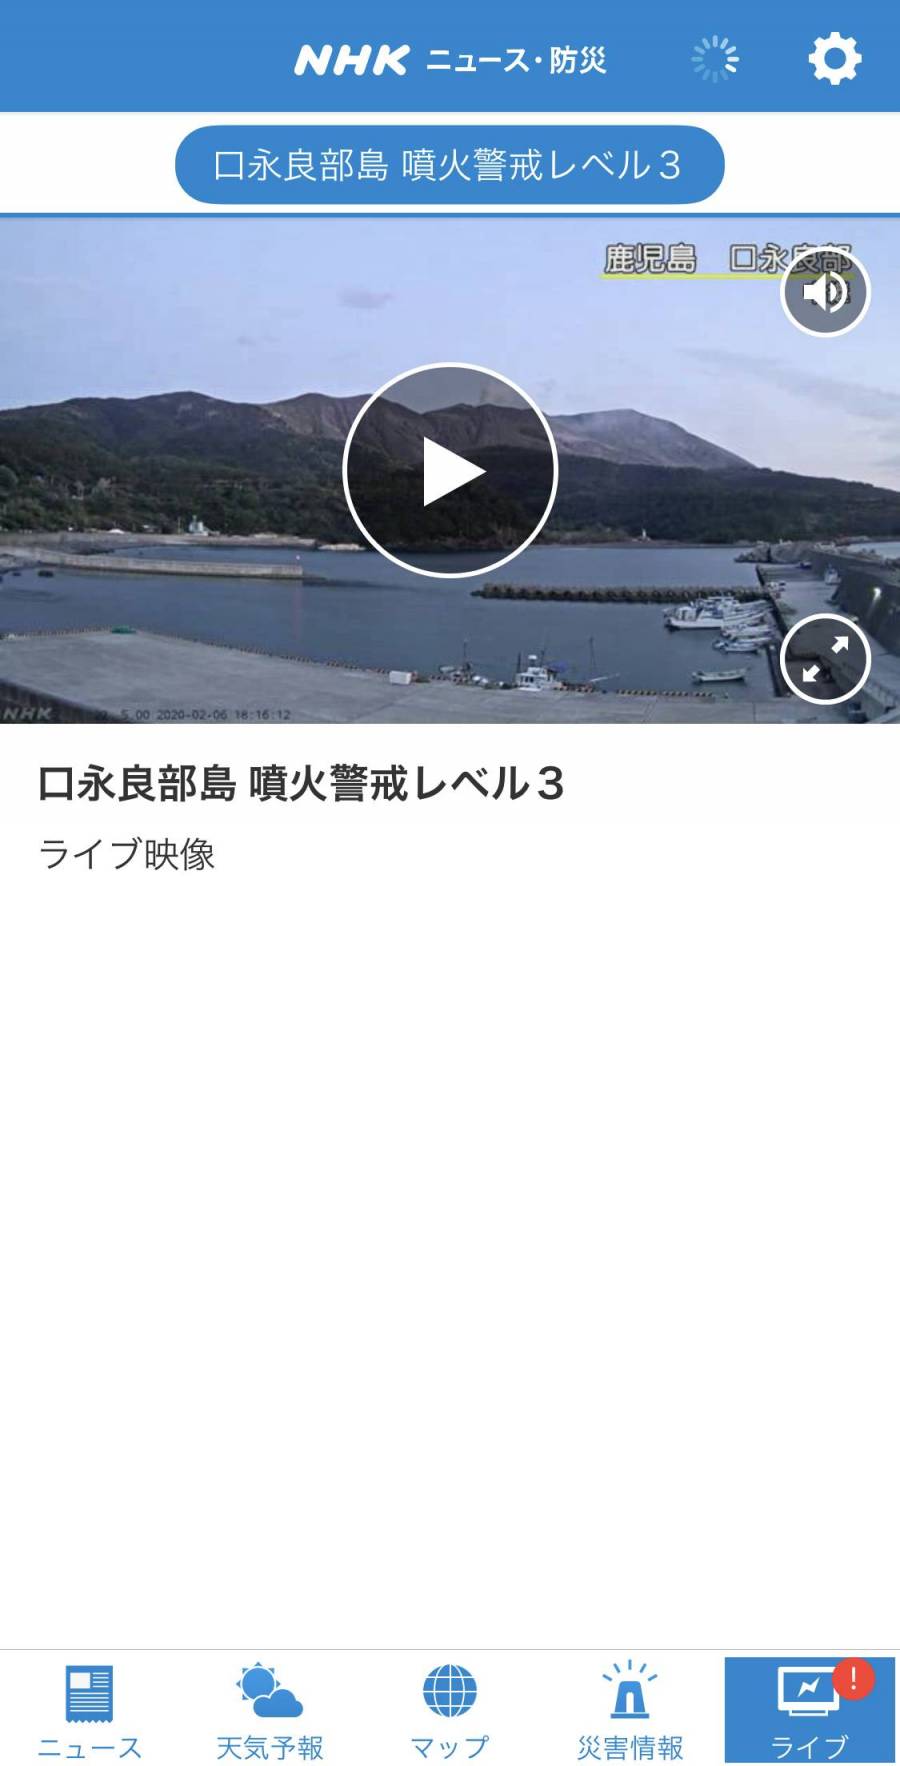 NHK ニュース・防災 ライブ映像